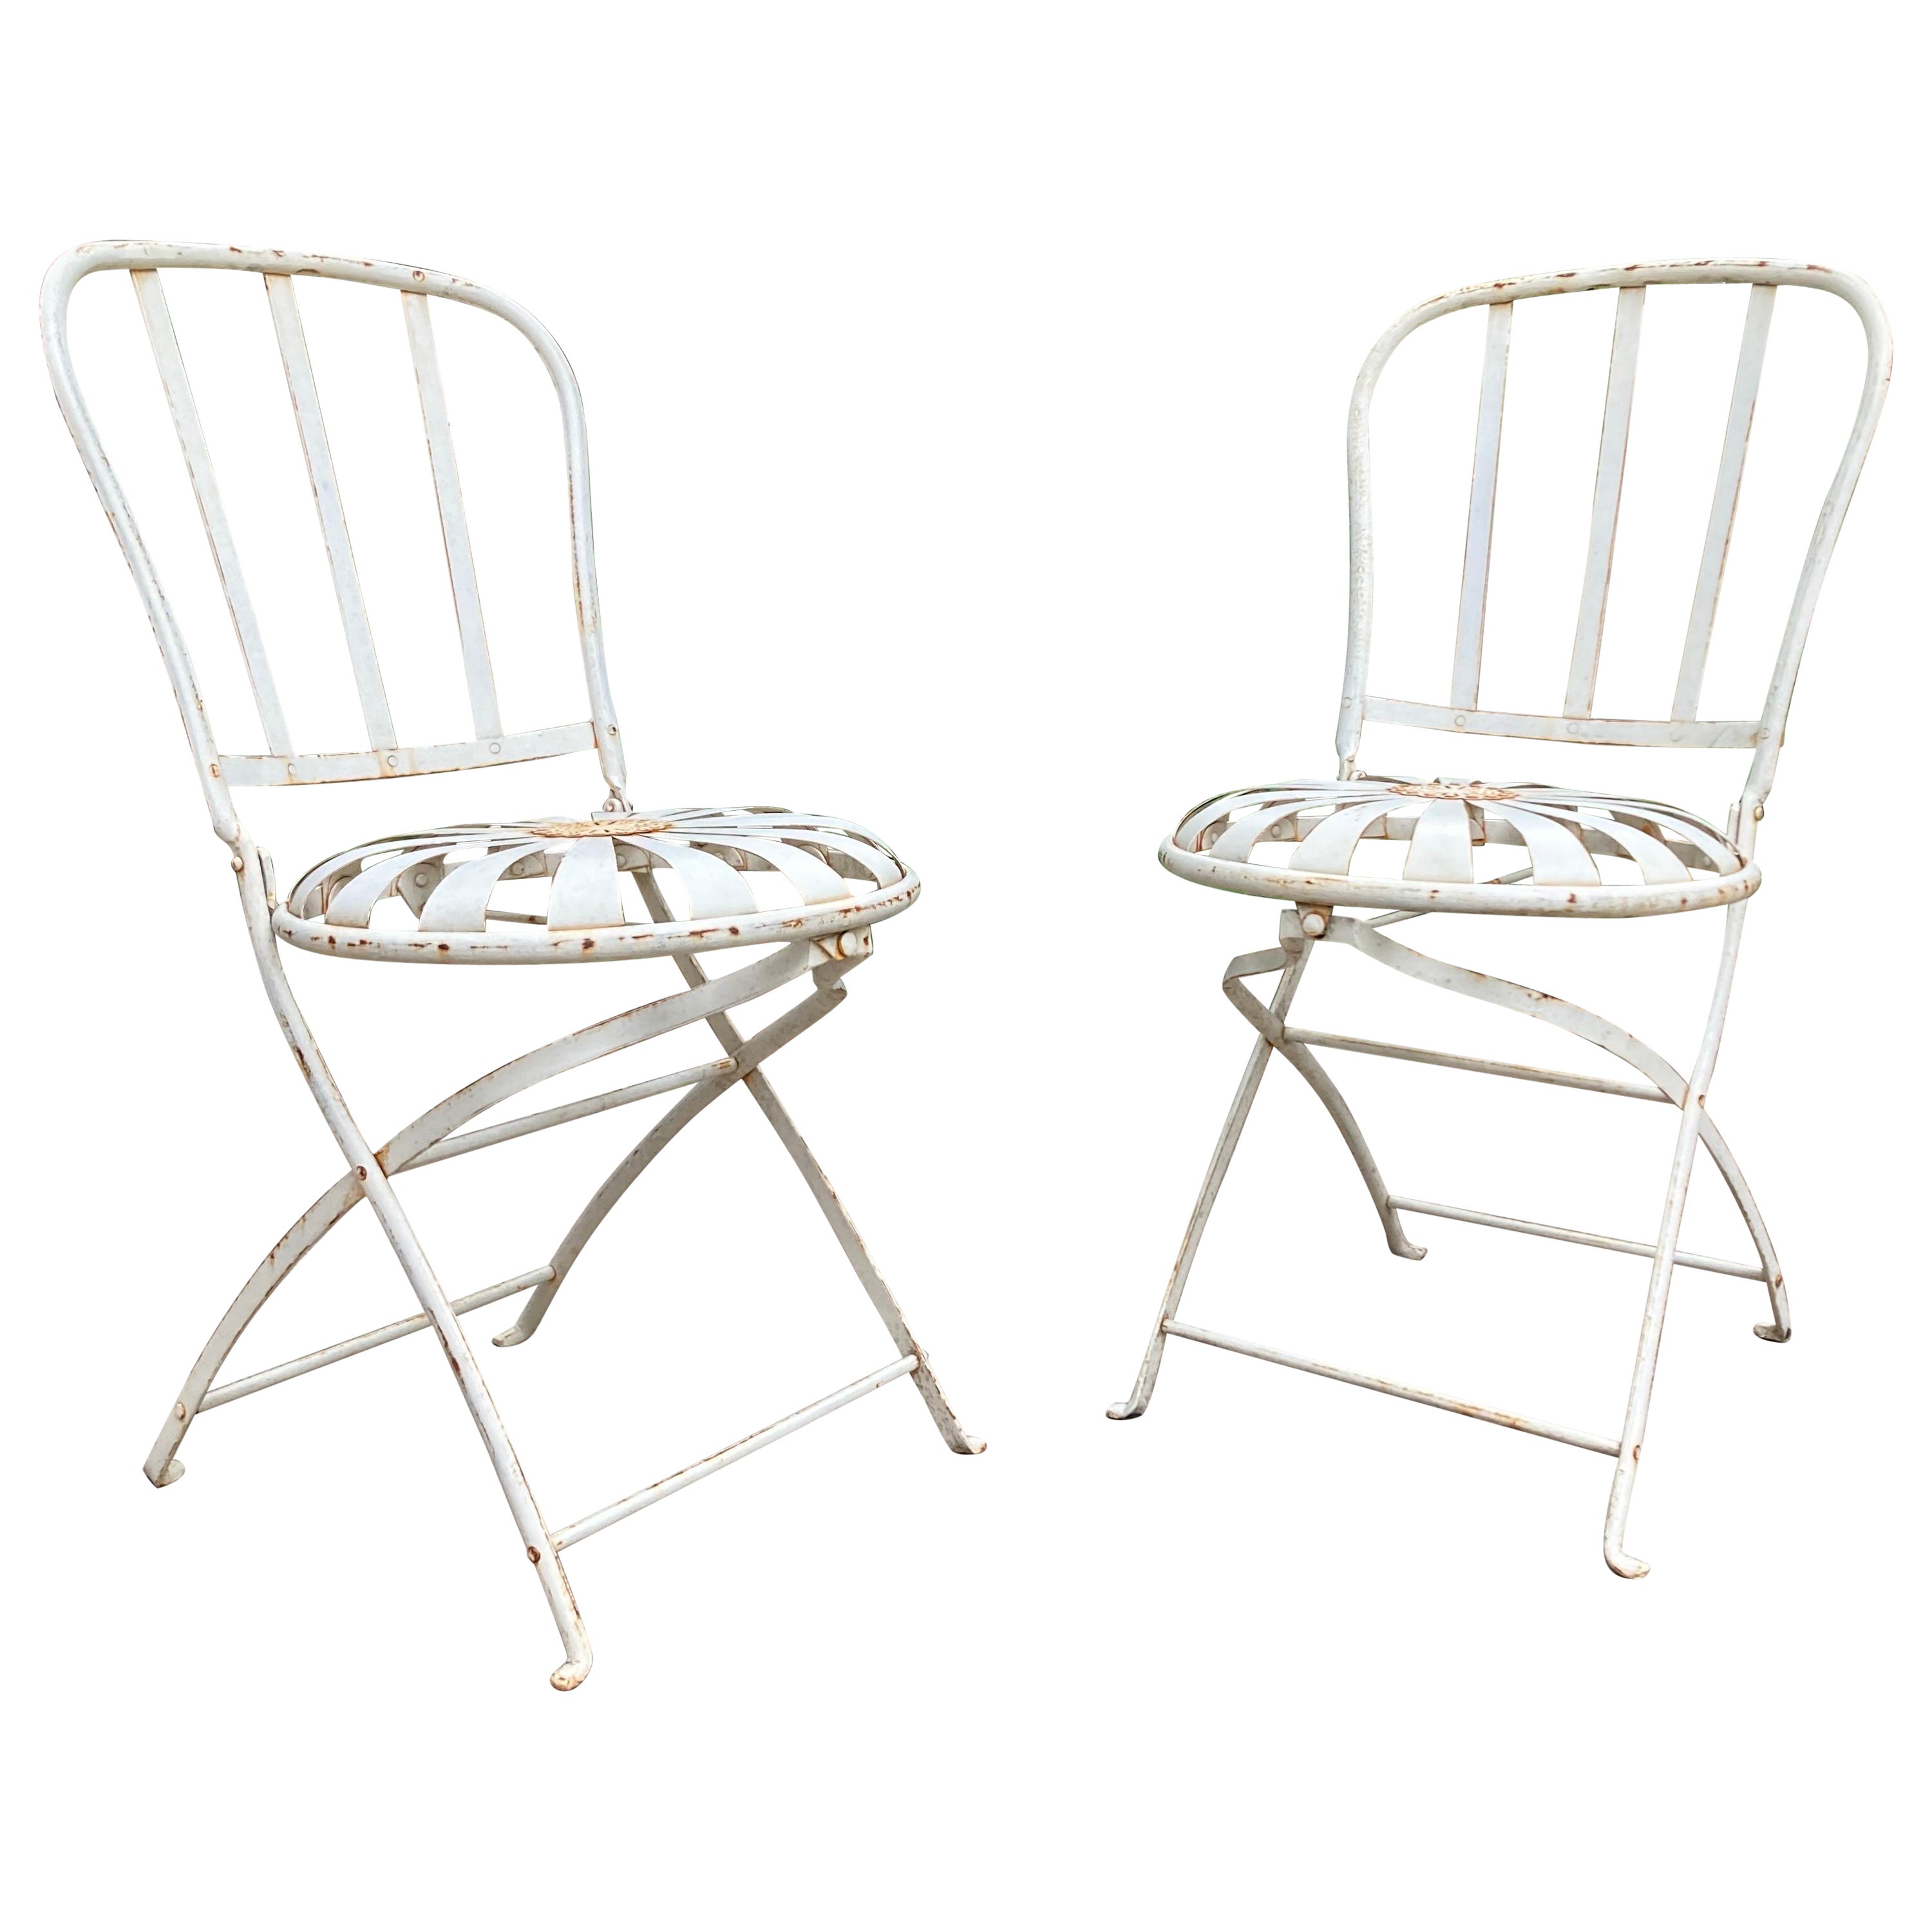 francois carre antique folding cafe chairs - a pair